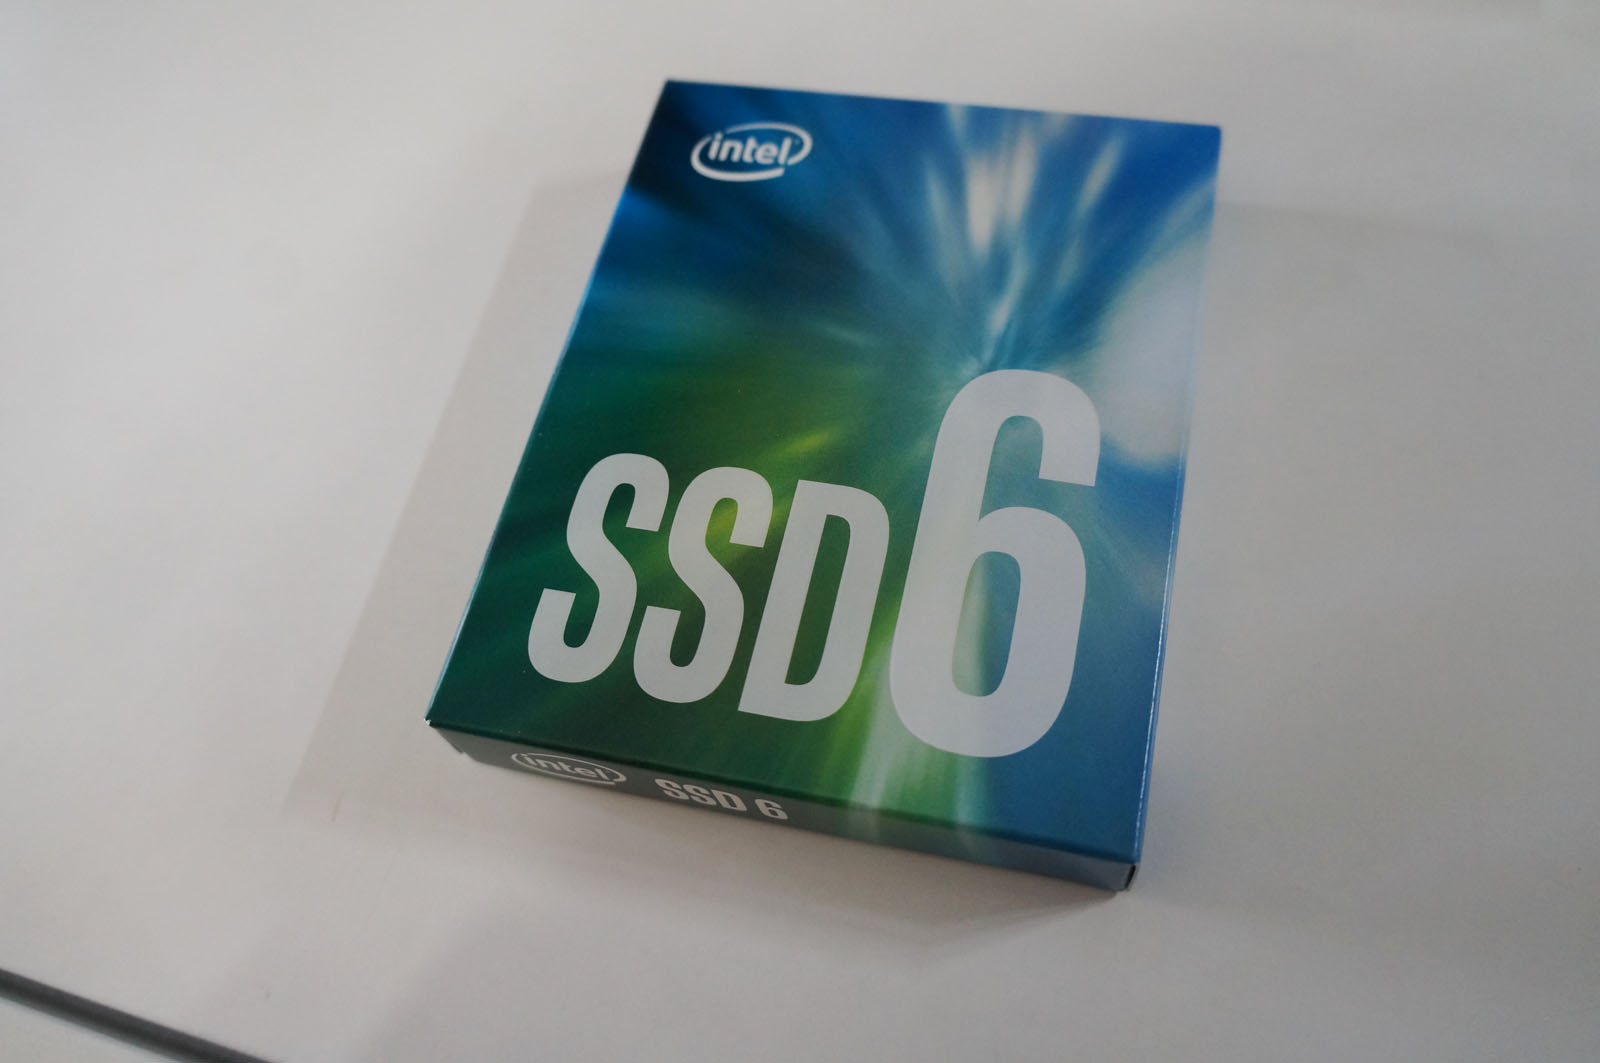 Intel SSD6